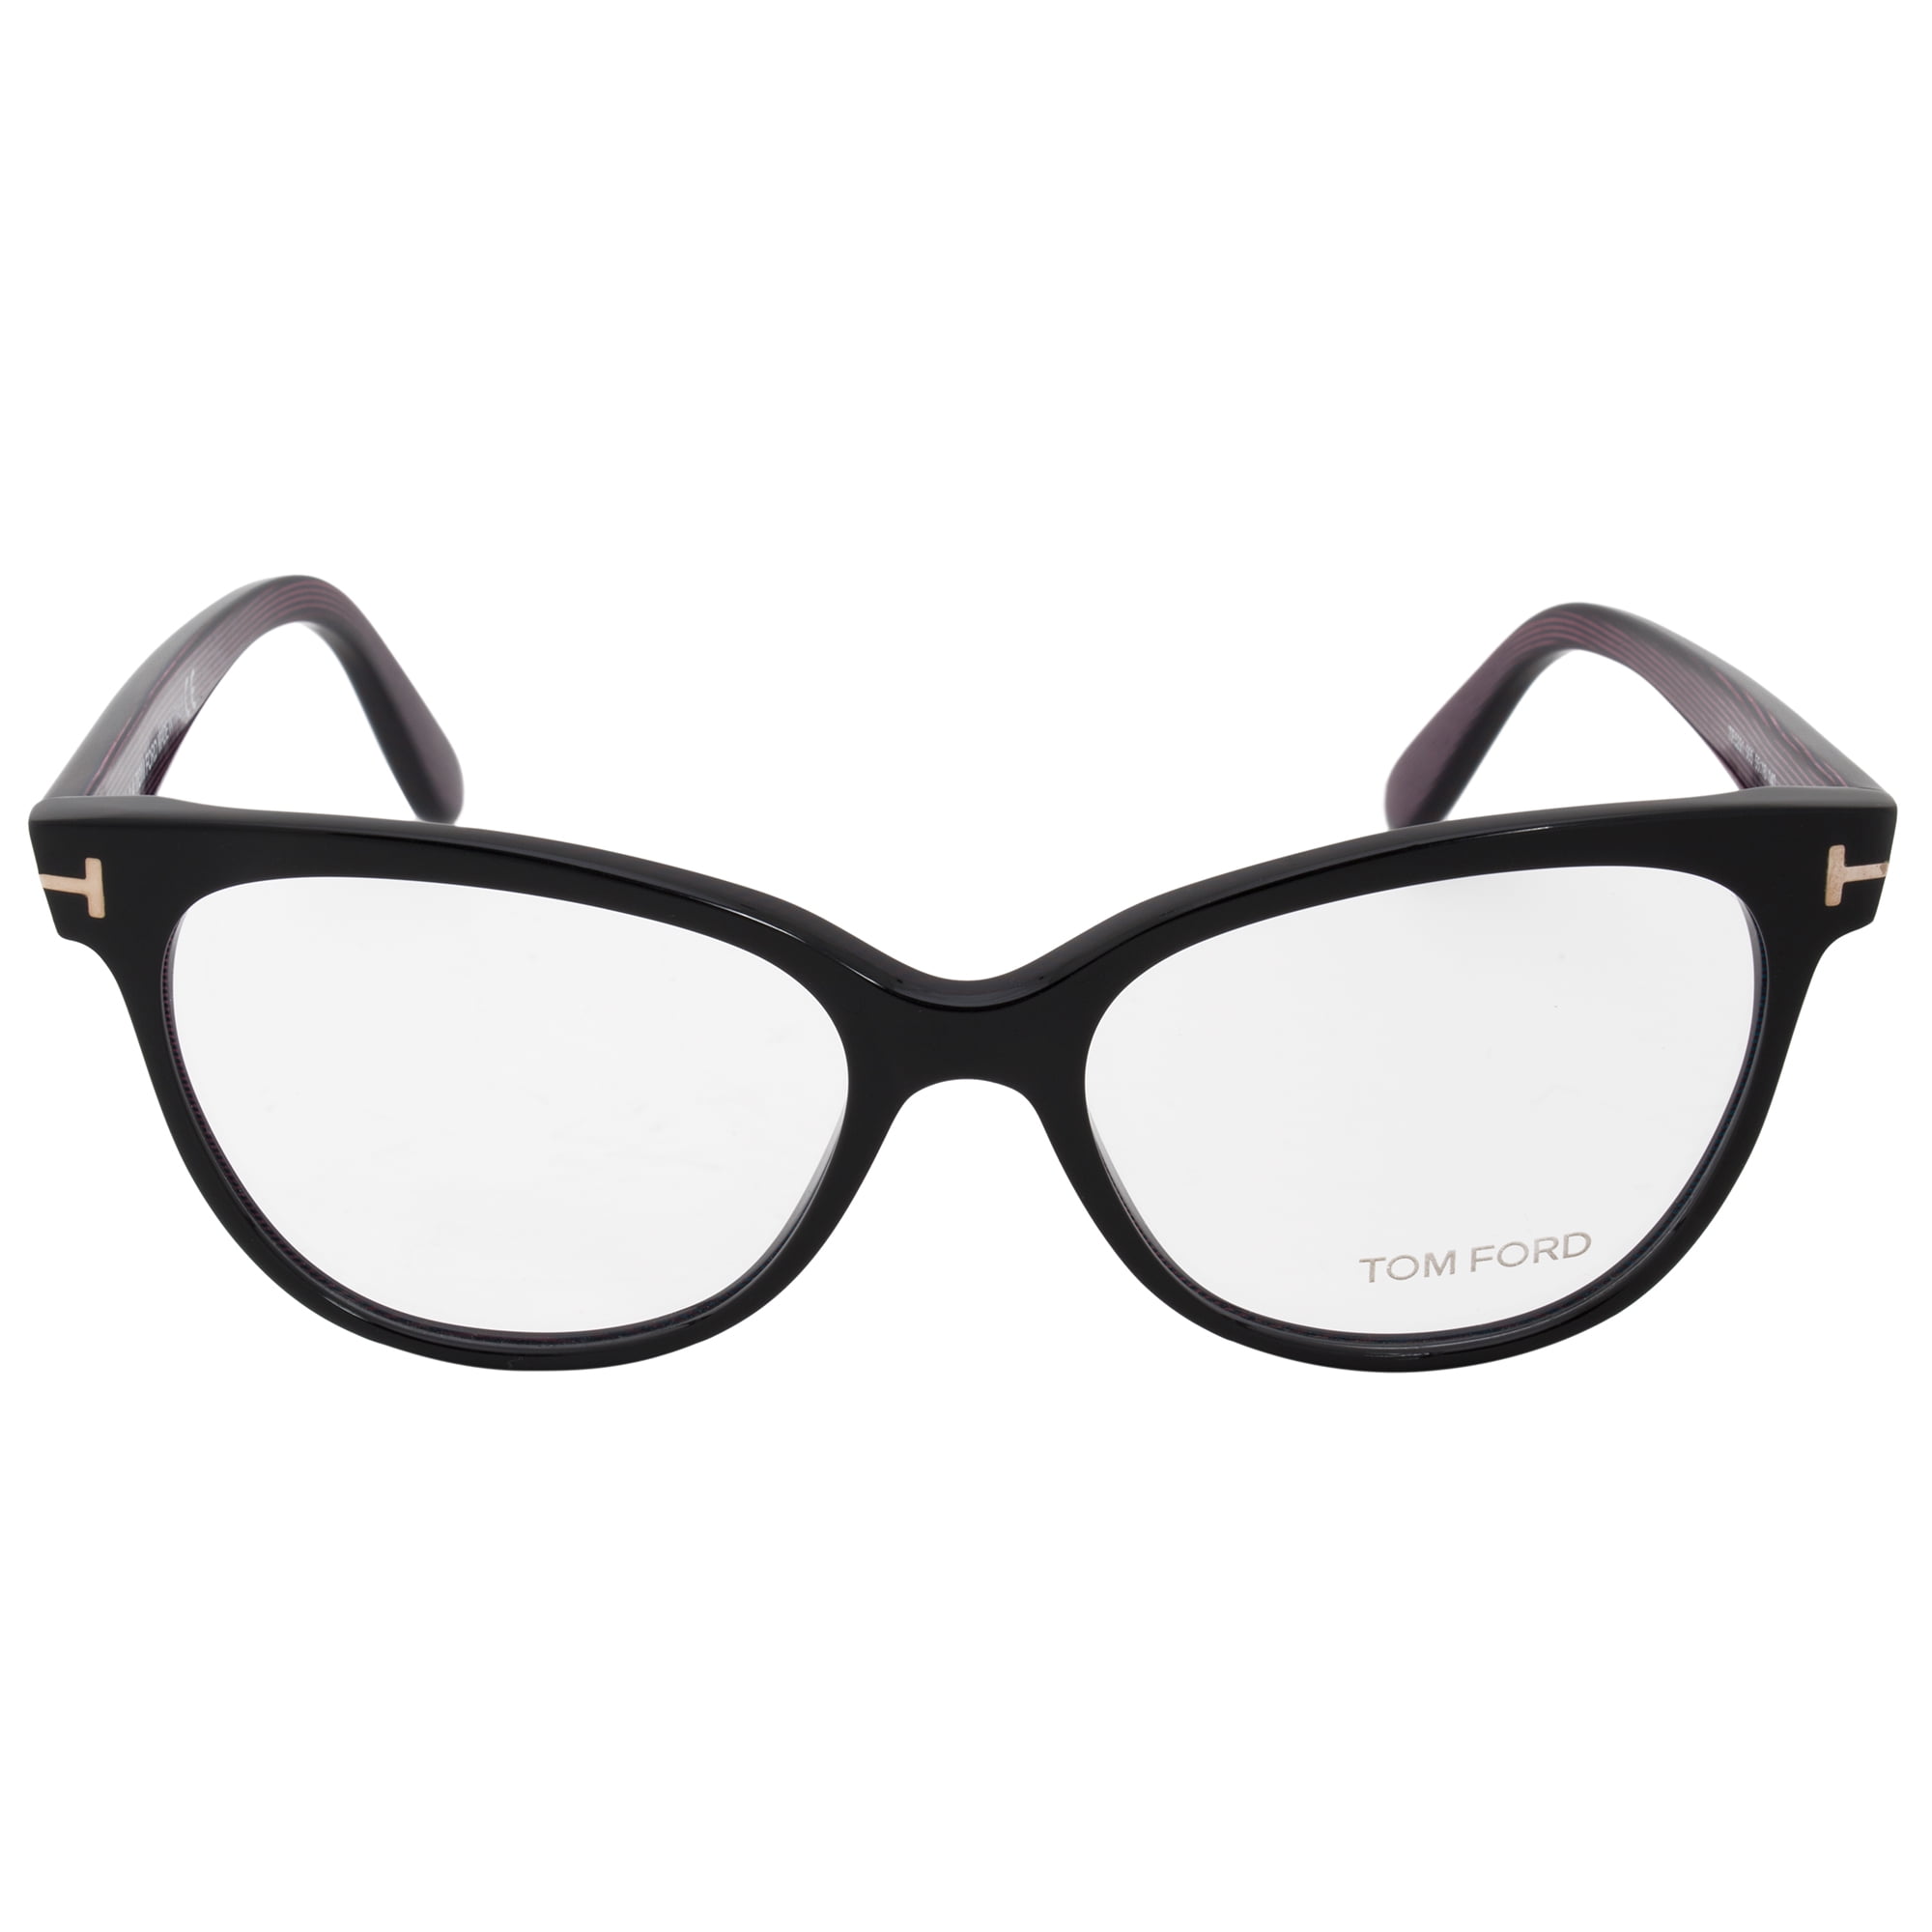 Tom Ford Ft5291 5 Cat Eye Black Eyeglass Frames Walmart Com Walmart Com